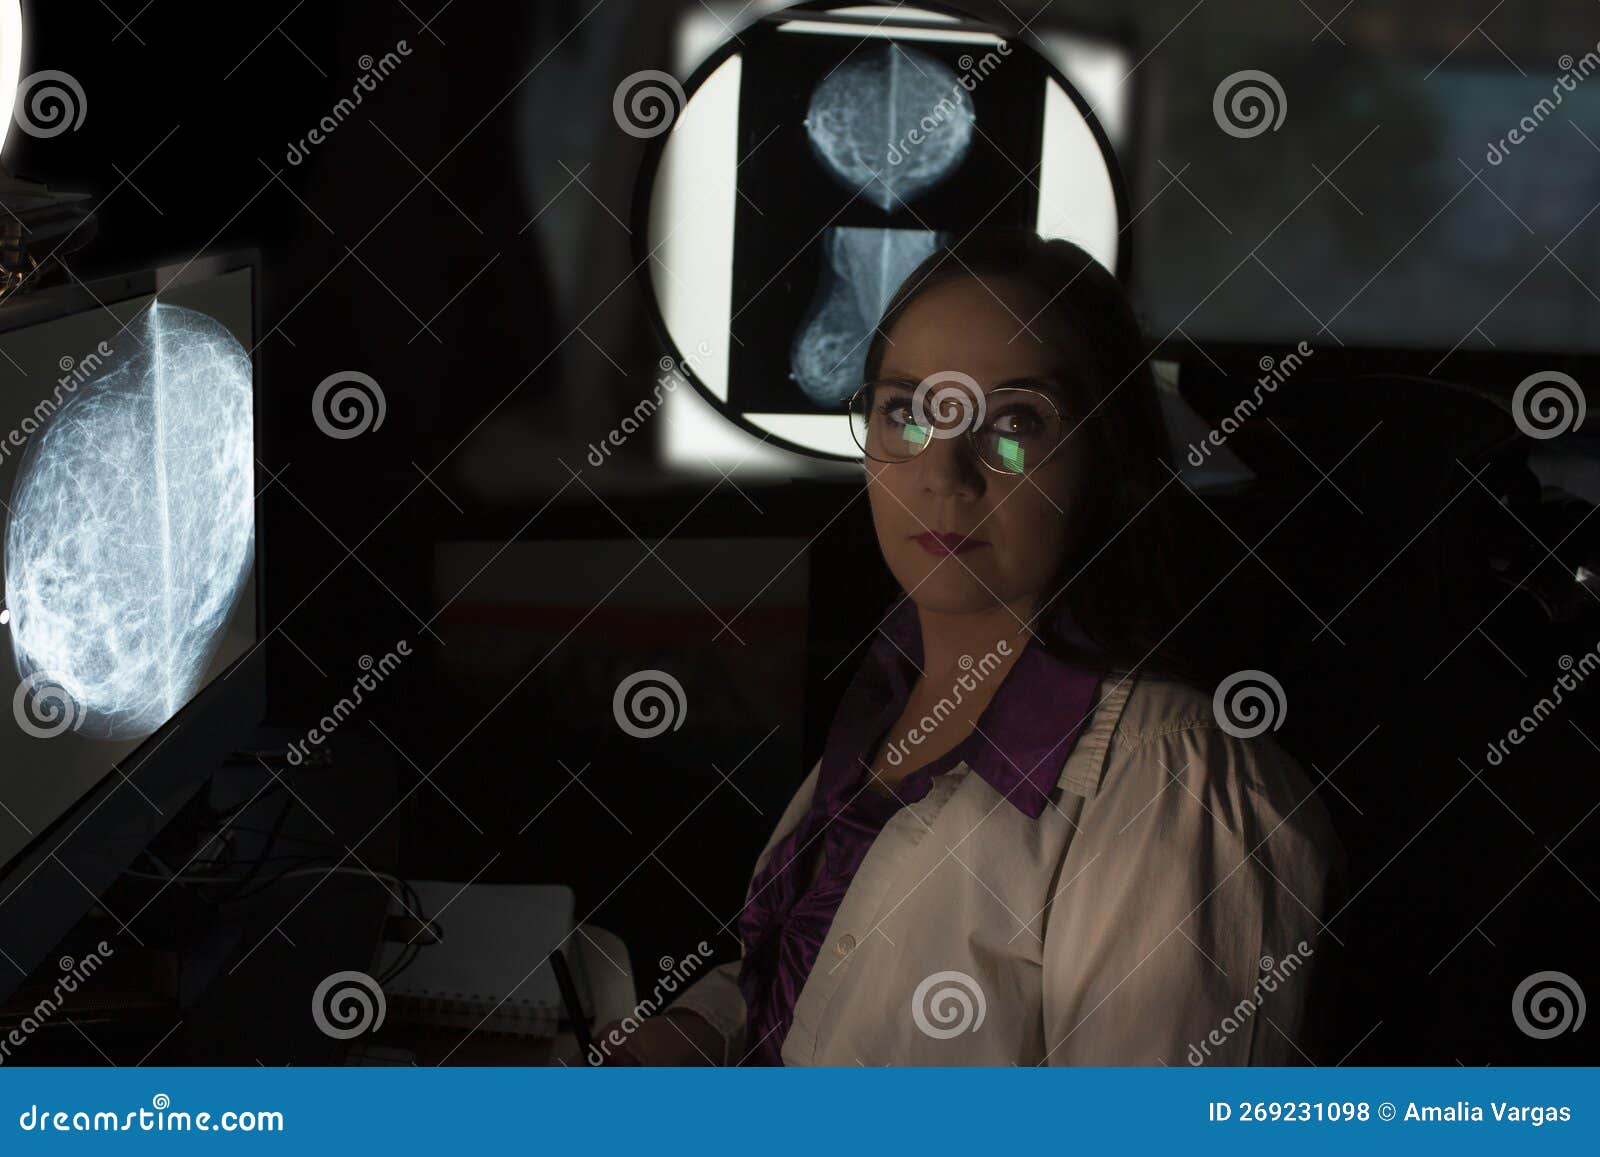 portrait of caucasian woman with glasses radiologist profession making interpretation report image interpretation x-ray